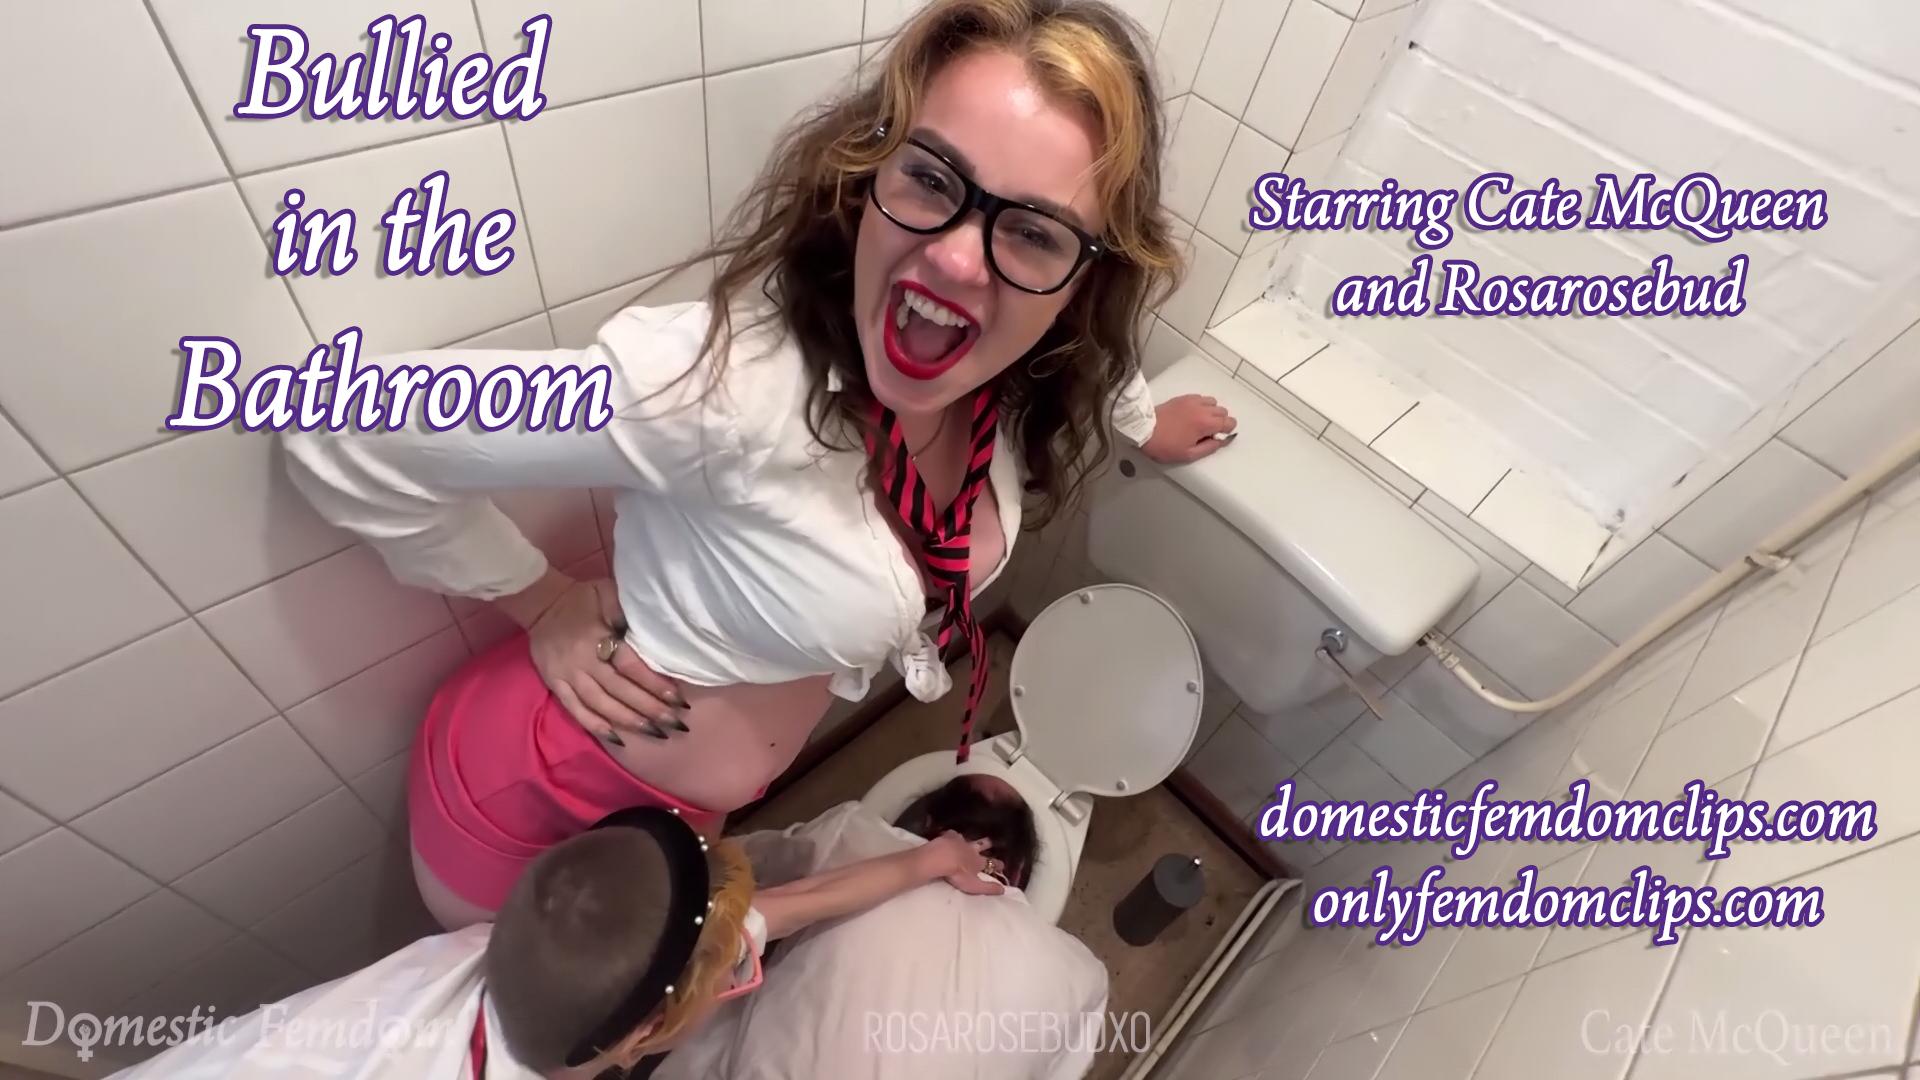 Bullied in Bathroom Title Slide - Bullied in the Bathroom